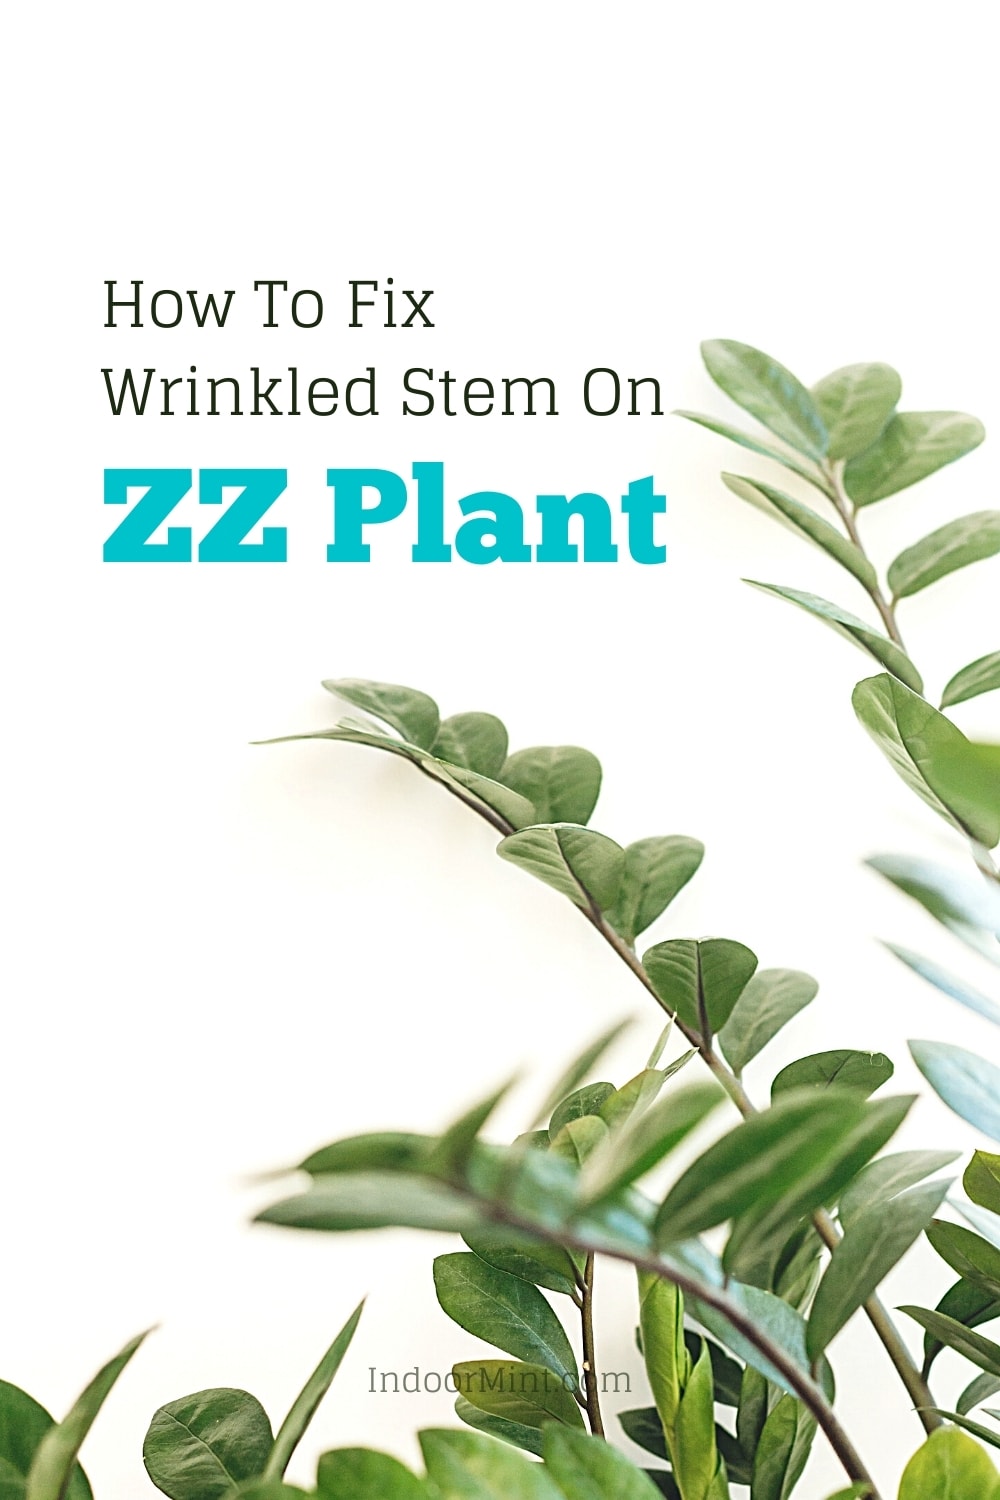 zz plant wrinkled stem guide cover image